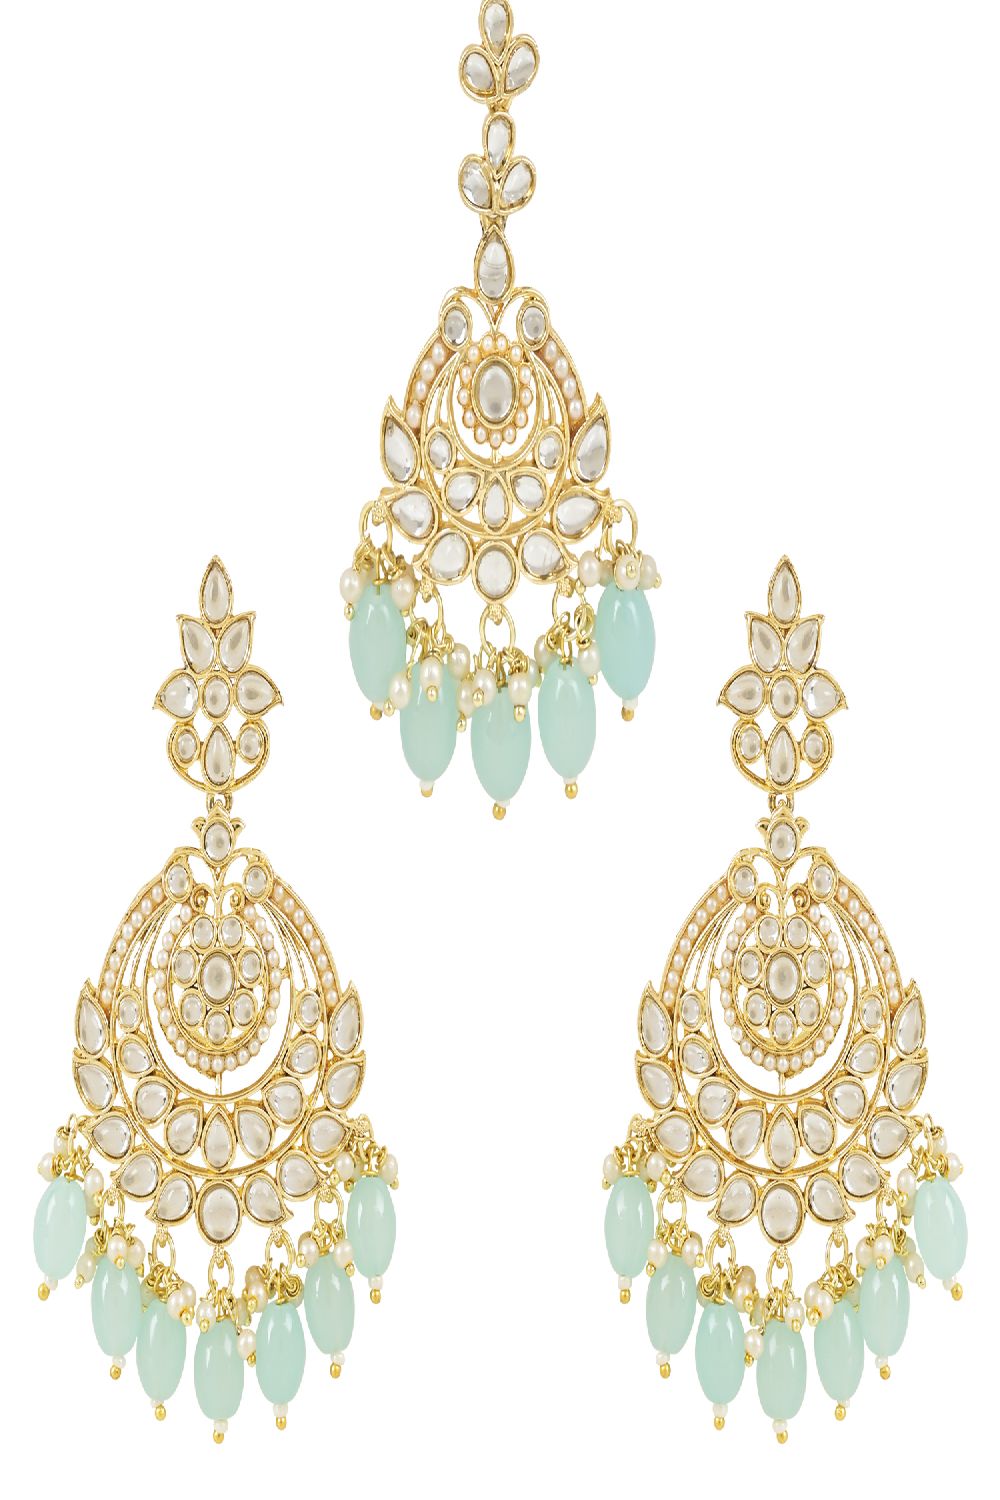 Gold Plated Traditional Kundan & Pearl Chandbali Earrings With Maang Tikka Set